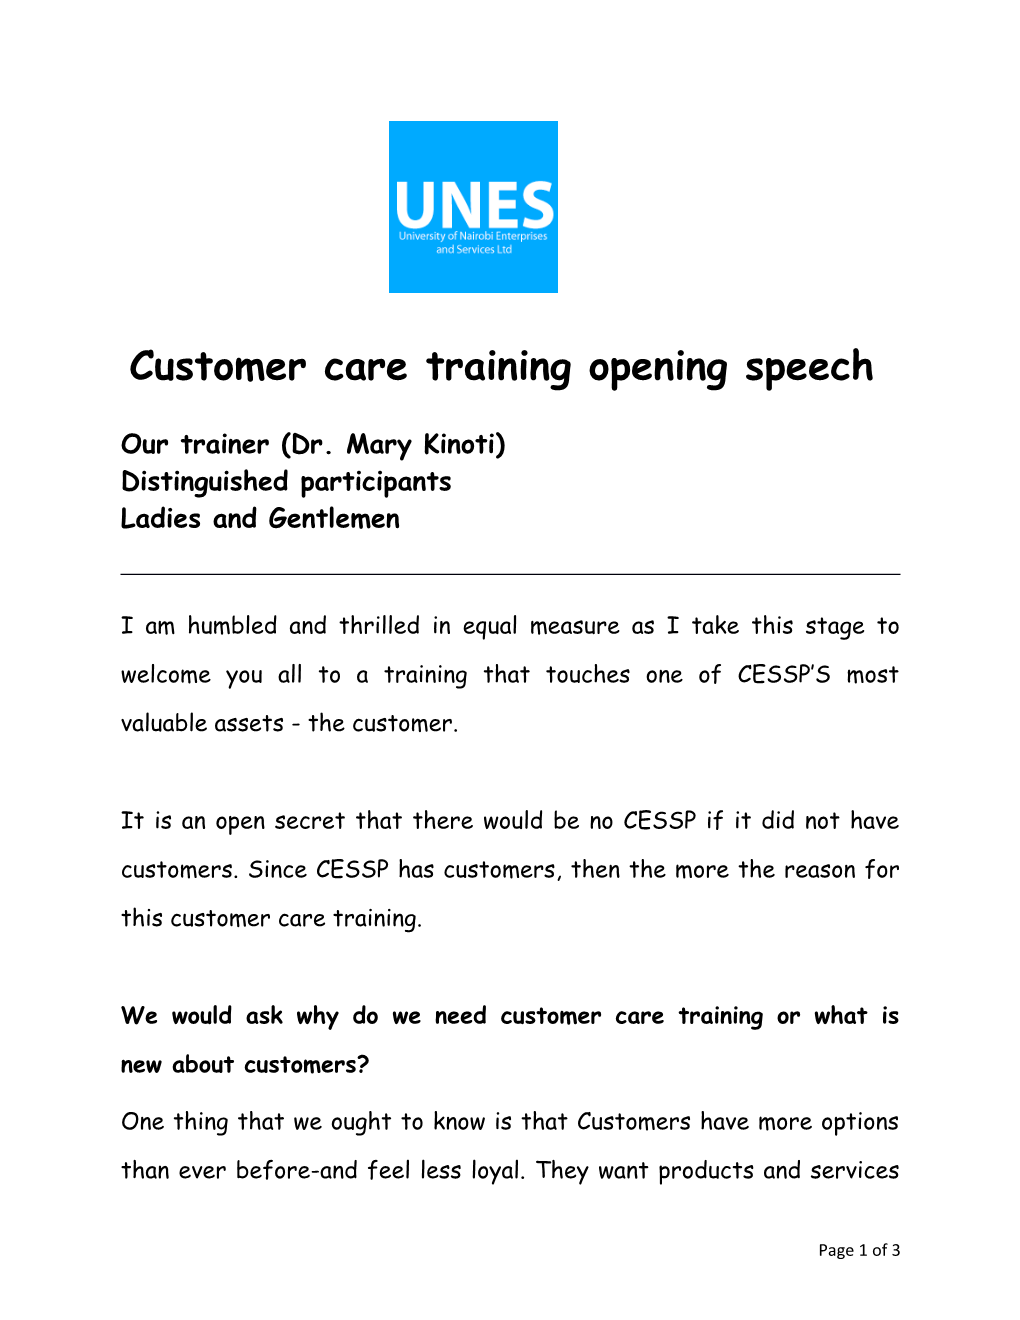 Customer Care Training Opening Speech